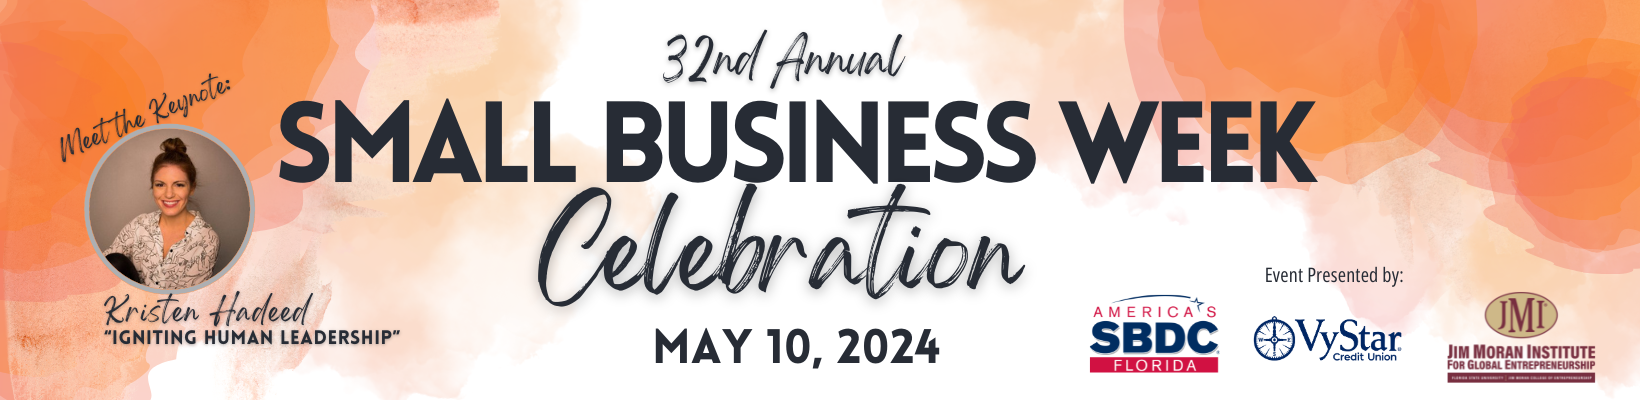 32nd annual small business week celebration May 10 2024 keynote Kristen Hadeed Igniting Human Leadership SBDC VyStar Credit Union and Jim Moran Institute for Global Entrepreneurs logos